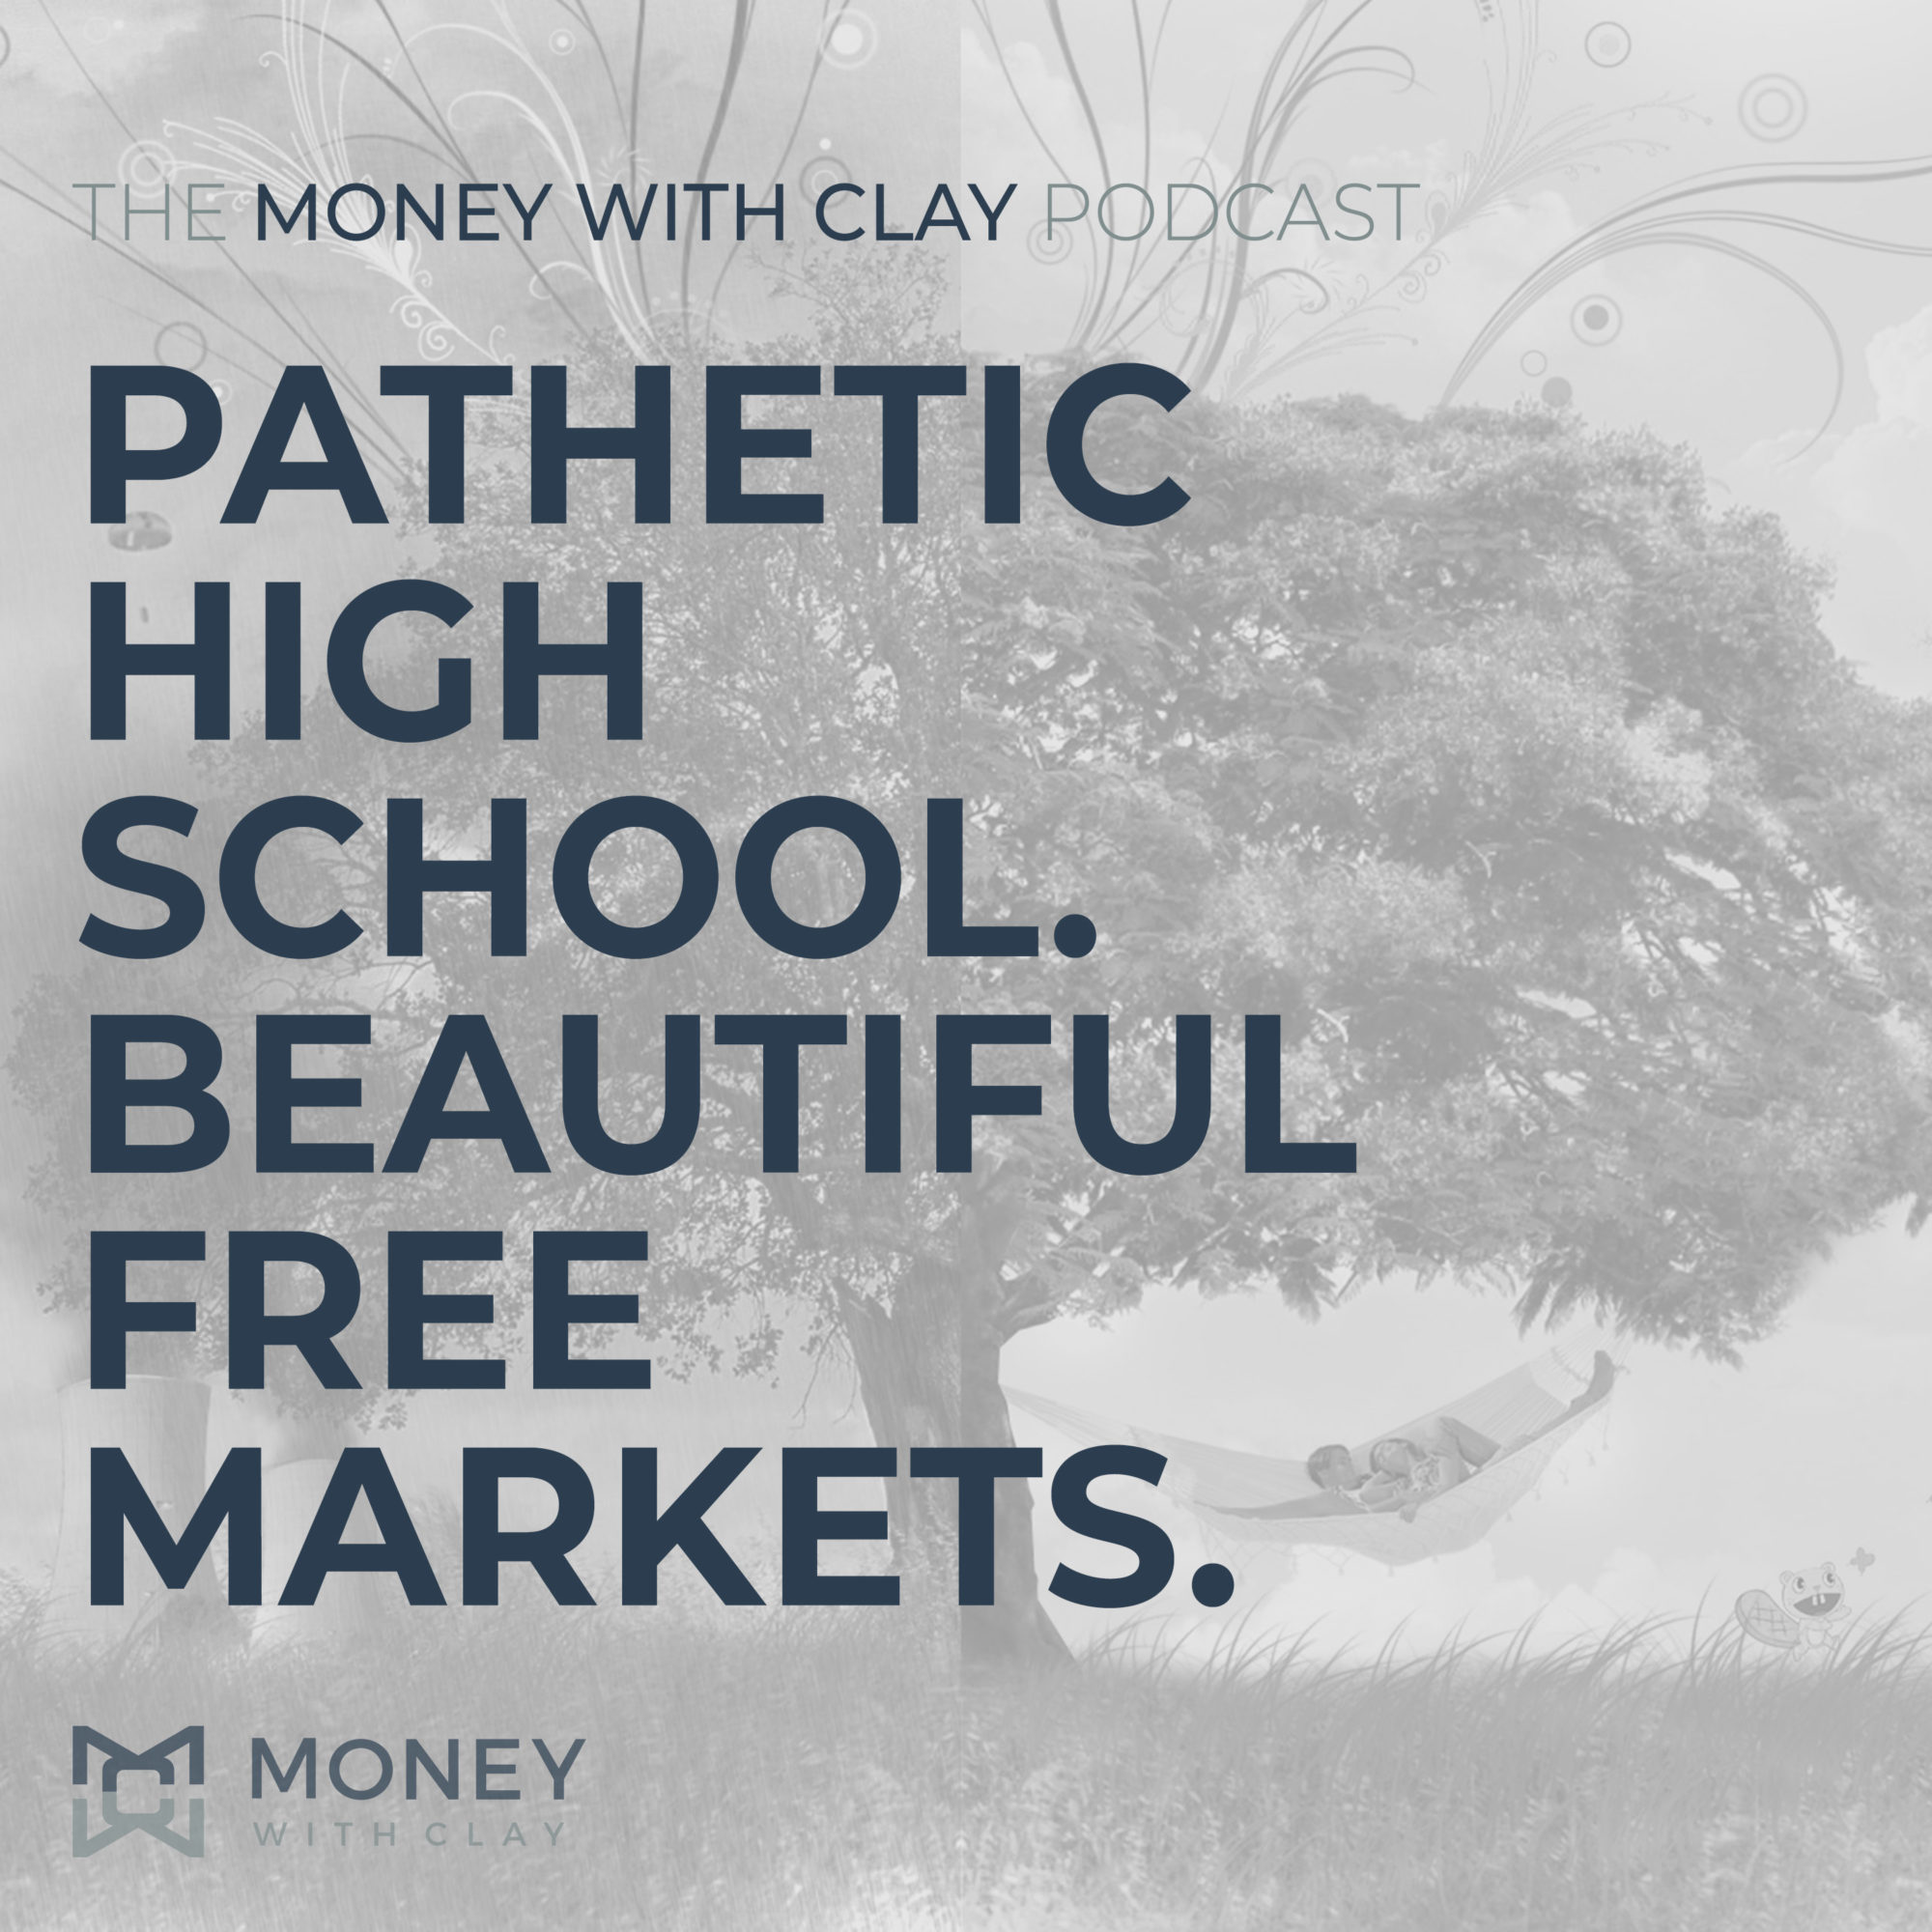 Pathetic High School. Beautiful Free Markets.